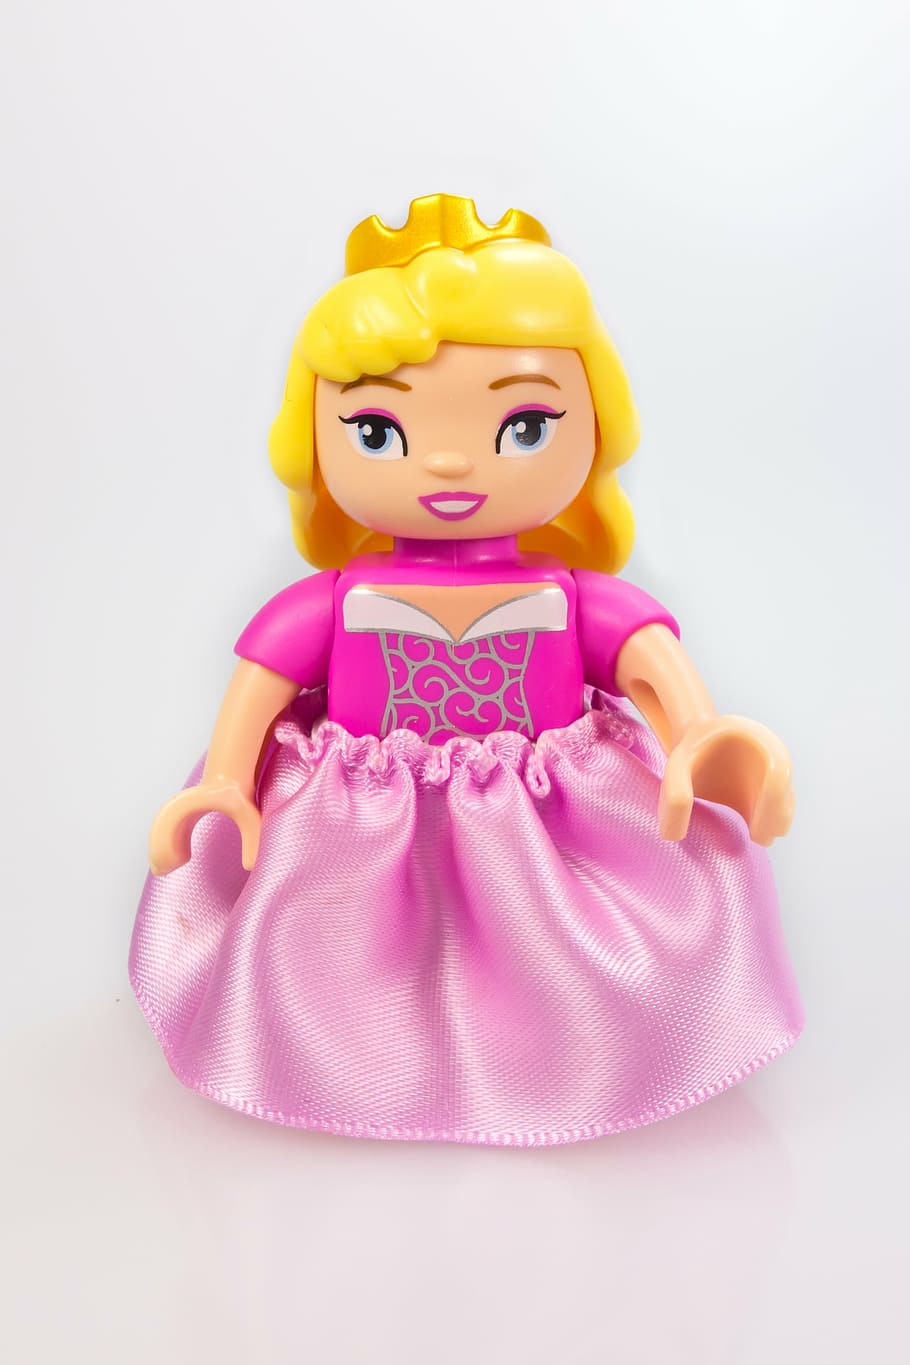 princess peach lego minifig, princess, figure, males, lego, duplo, toys, legomaennchen, cut out, pink color